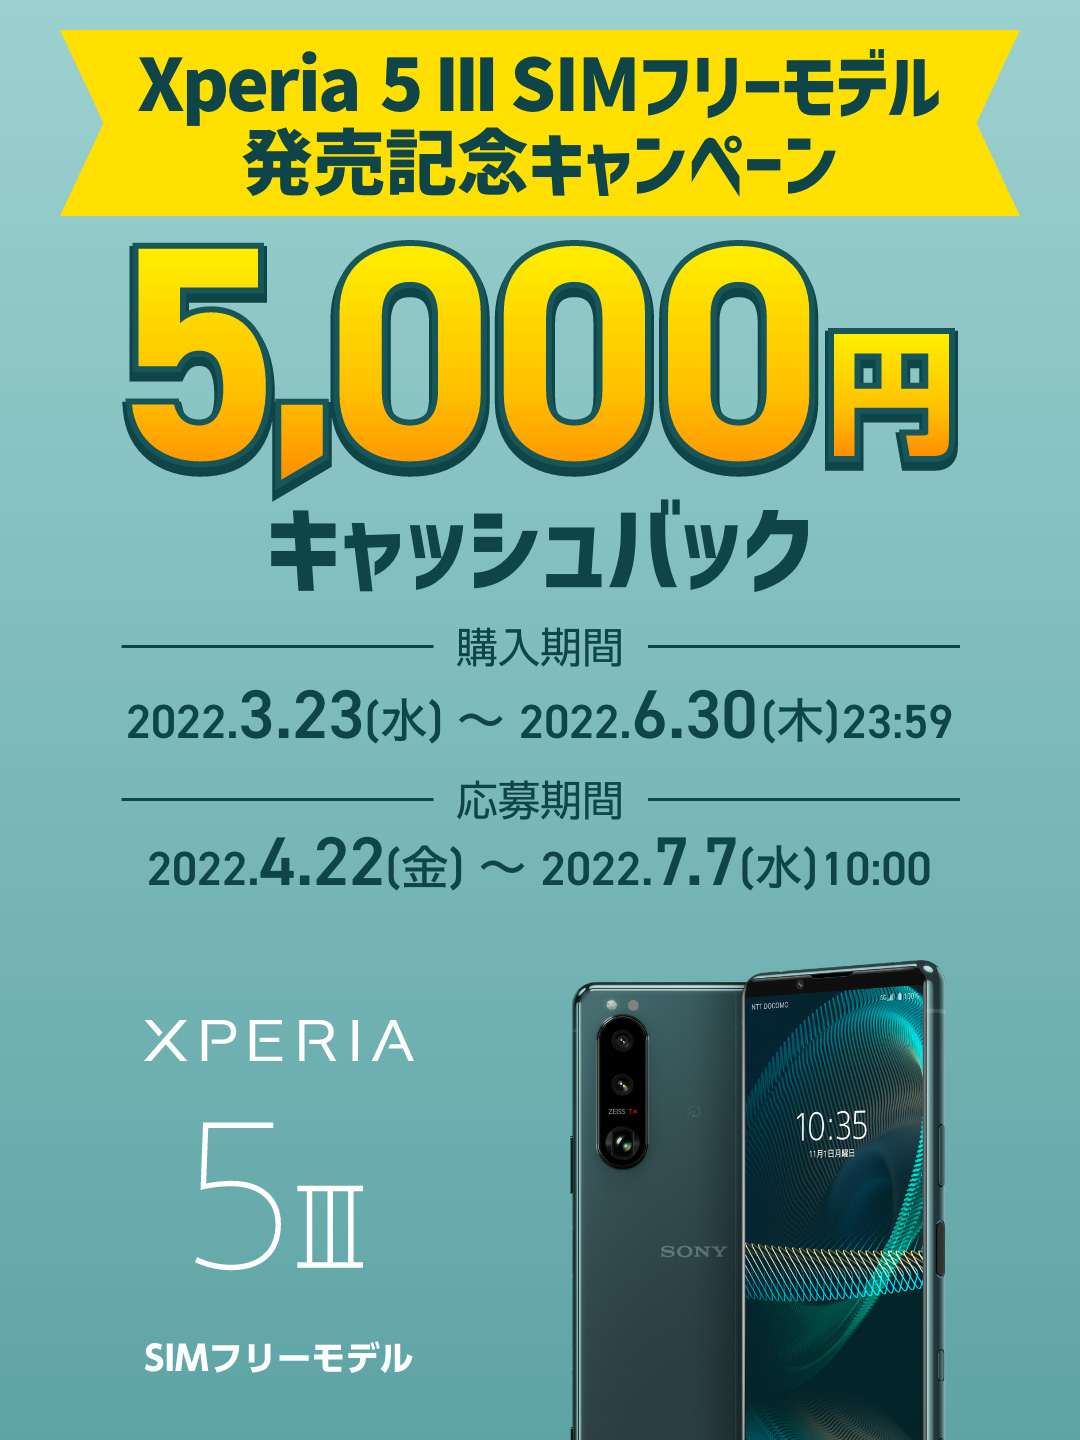 Xperia 5 III SIMフリーモデル発売記念キャンペーン 5,000円キャッシュバック 購入期間：2022.3.23(水) ～ 2022.6.30(木)23:59 応募期間：2022.4.22(金) ～ 2022.7.7(木)10:00